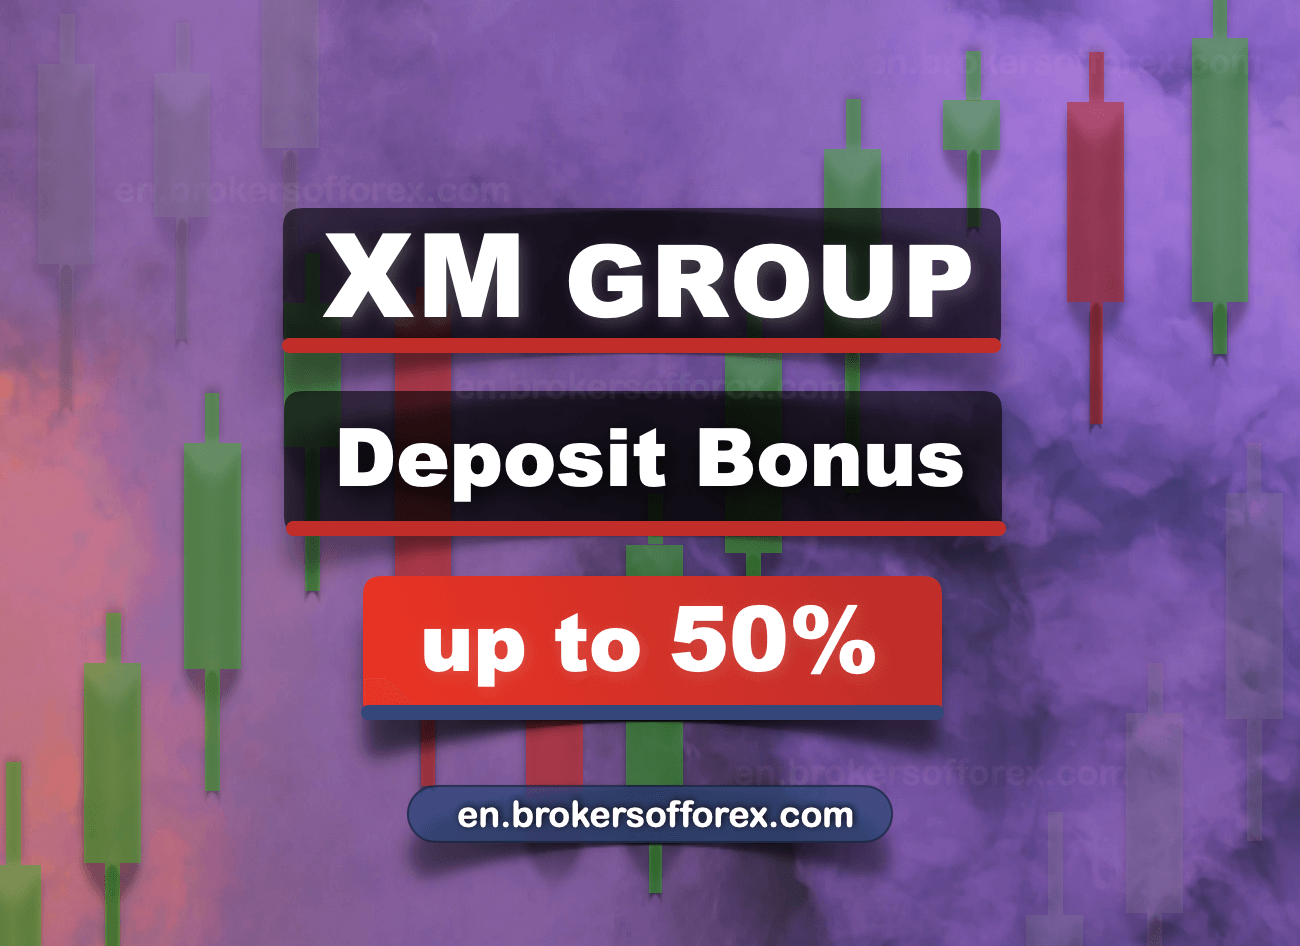 XM Group Deposit Bonus